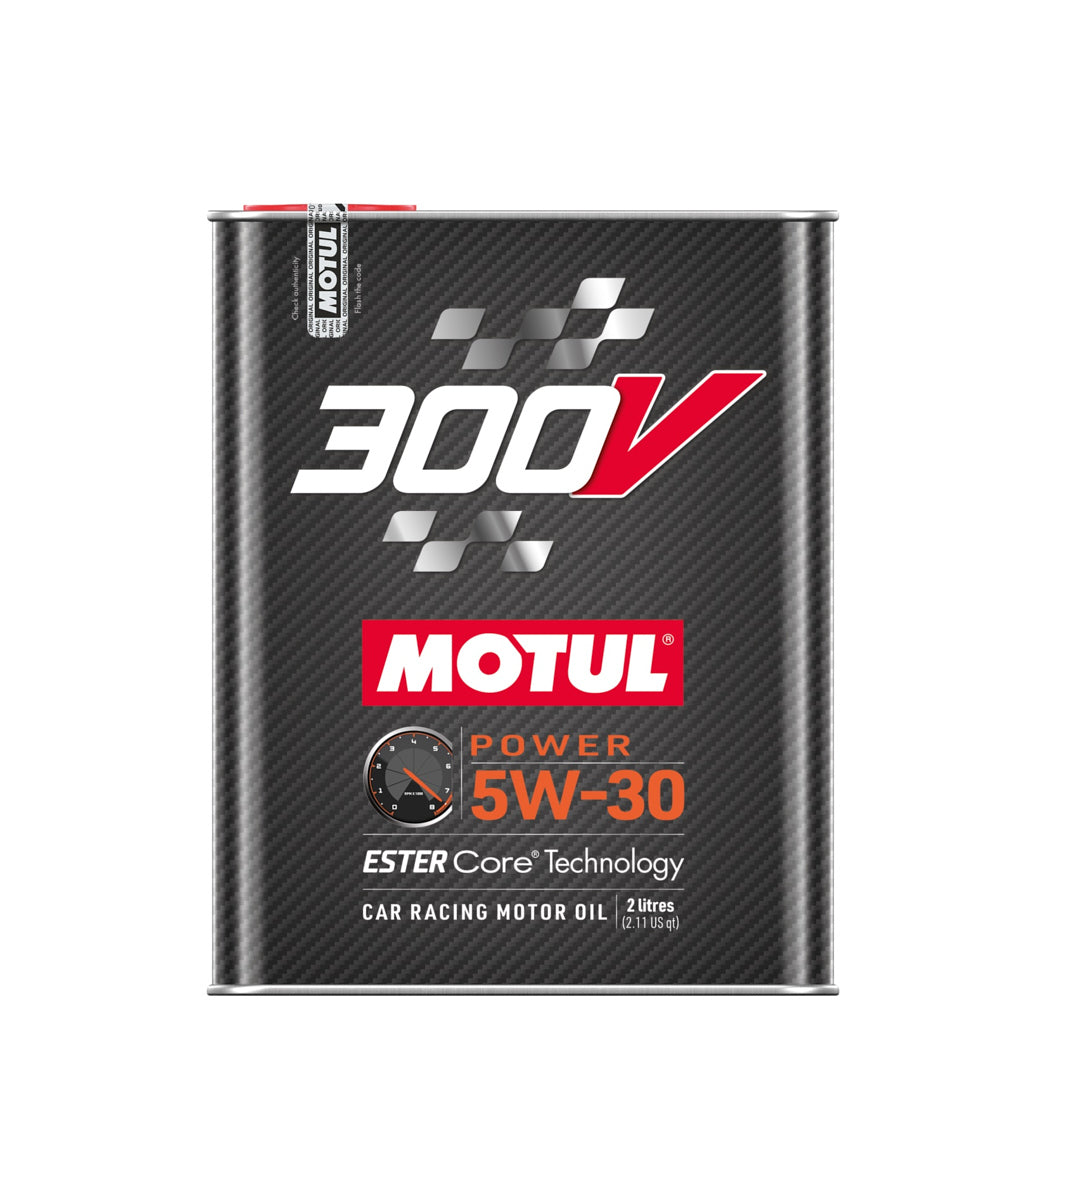 Motul 300V Power Oil 5w-30 2 Liter MTL110814